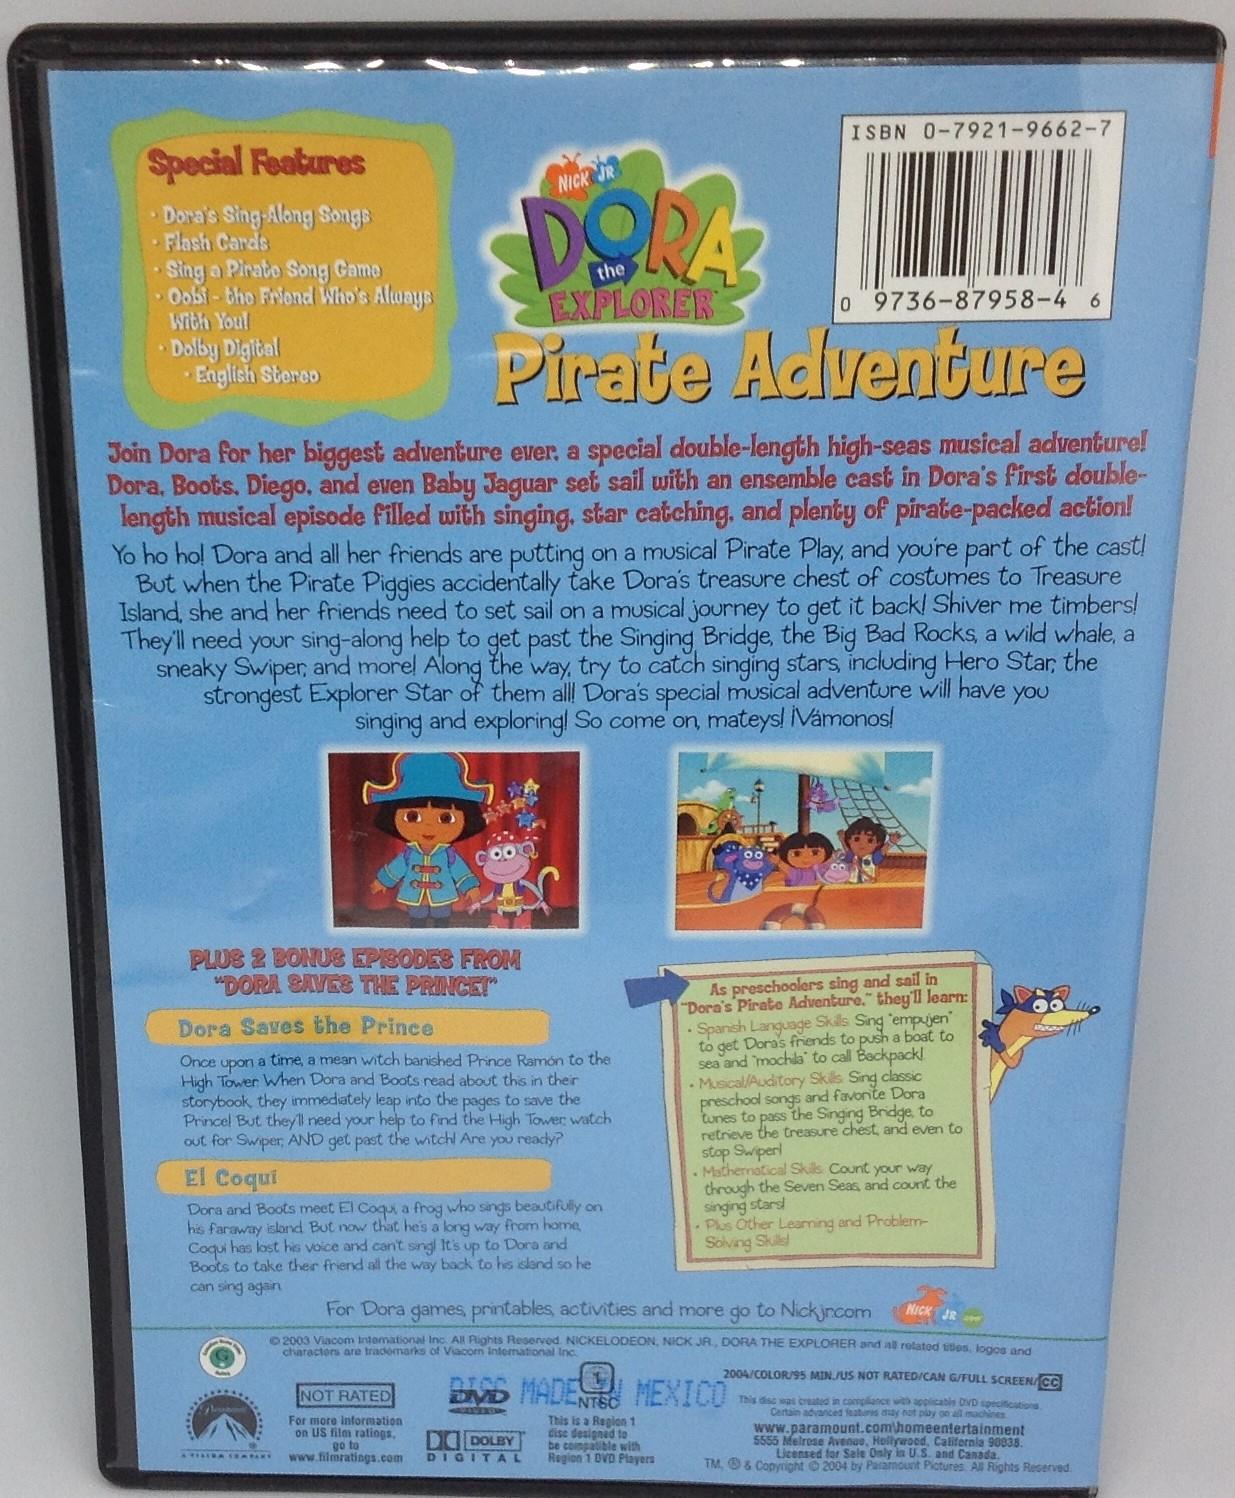 Dora the Explorer - Pirate Adventure (DVD, 2004) 97368795846 | eBay